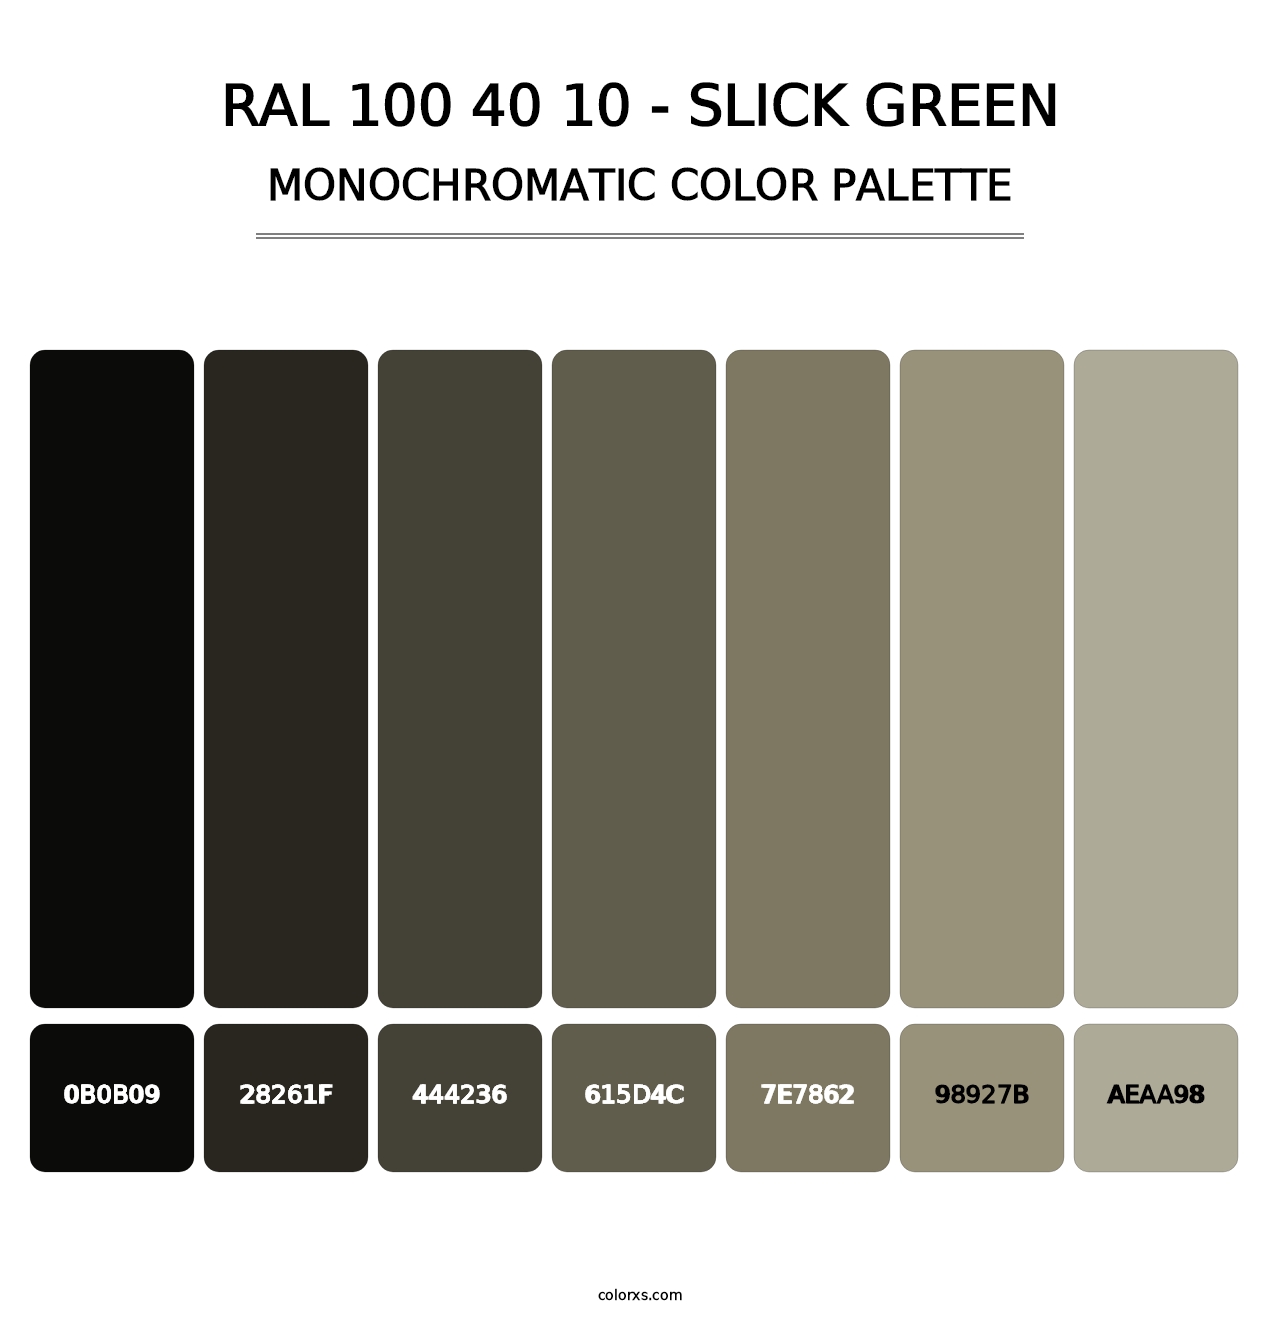 RAL 100 40 10 - Slick Green - Monochromatic Color Palette